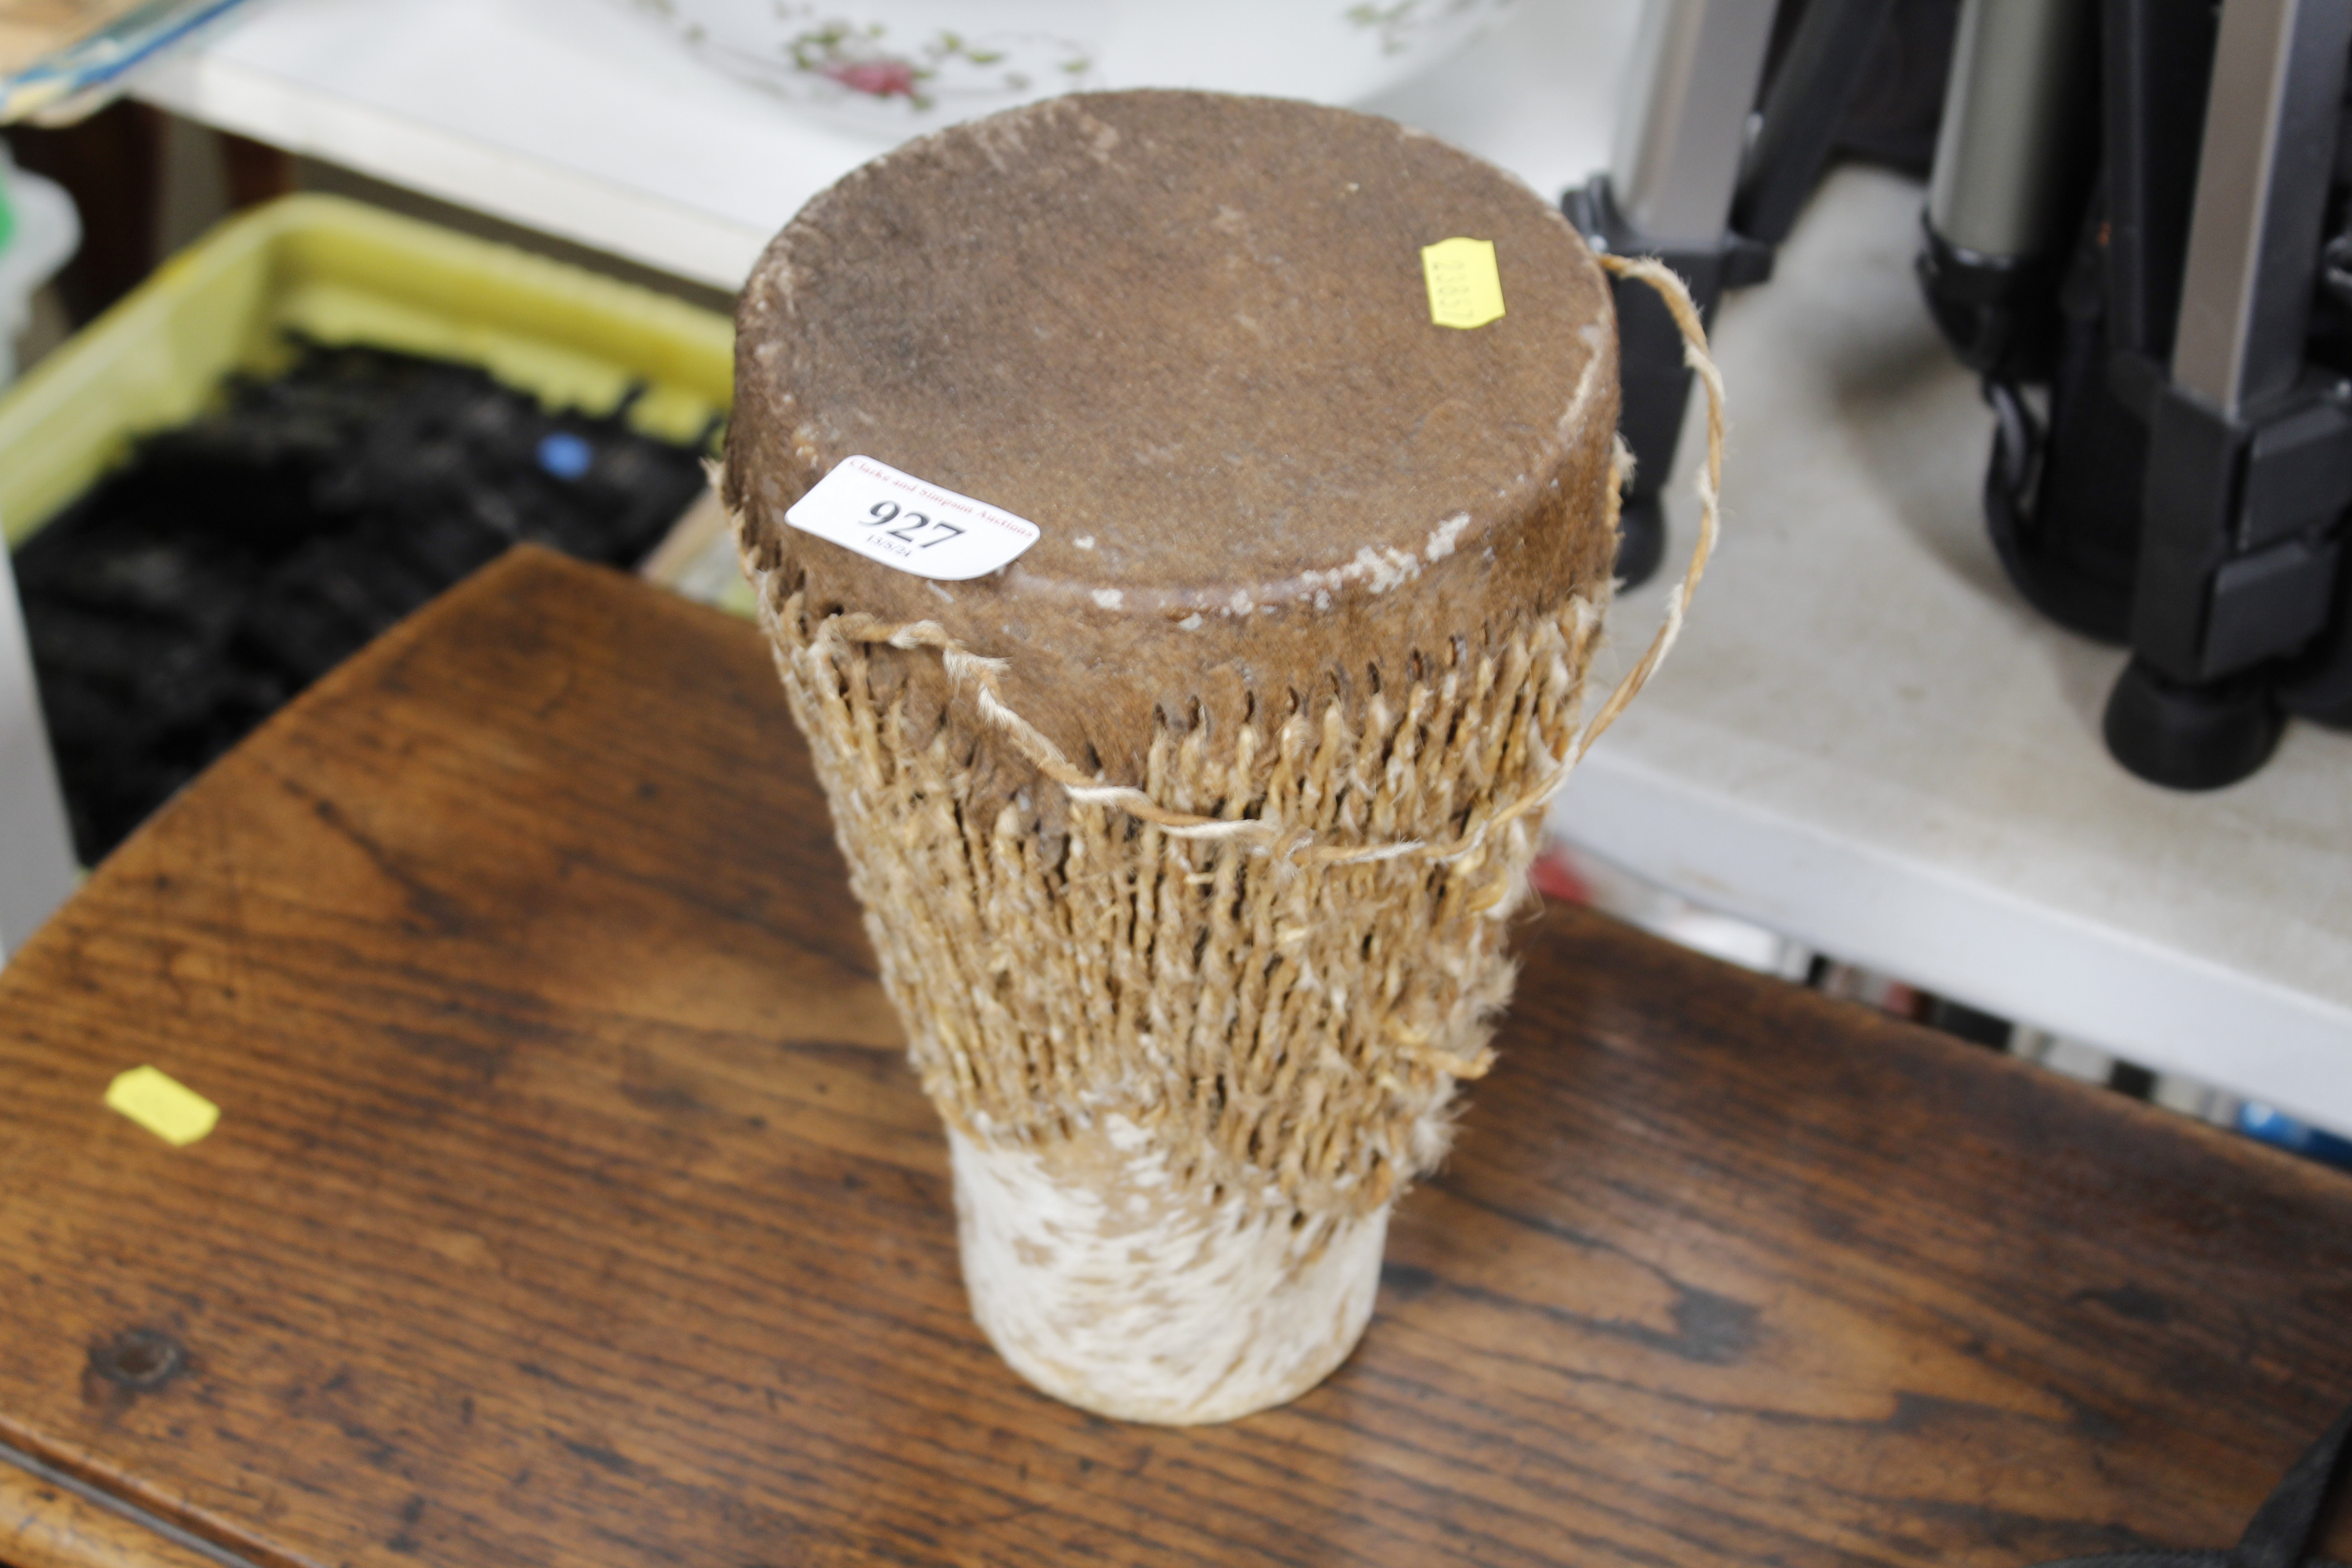 An African drum